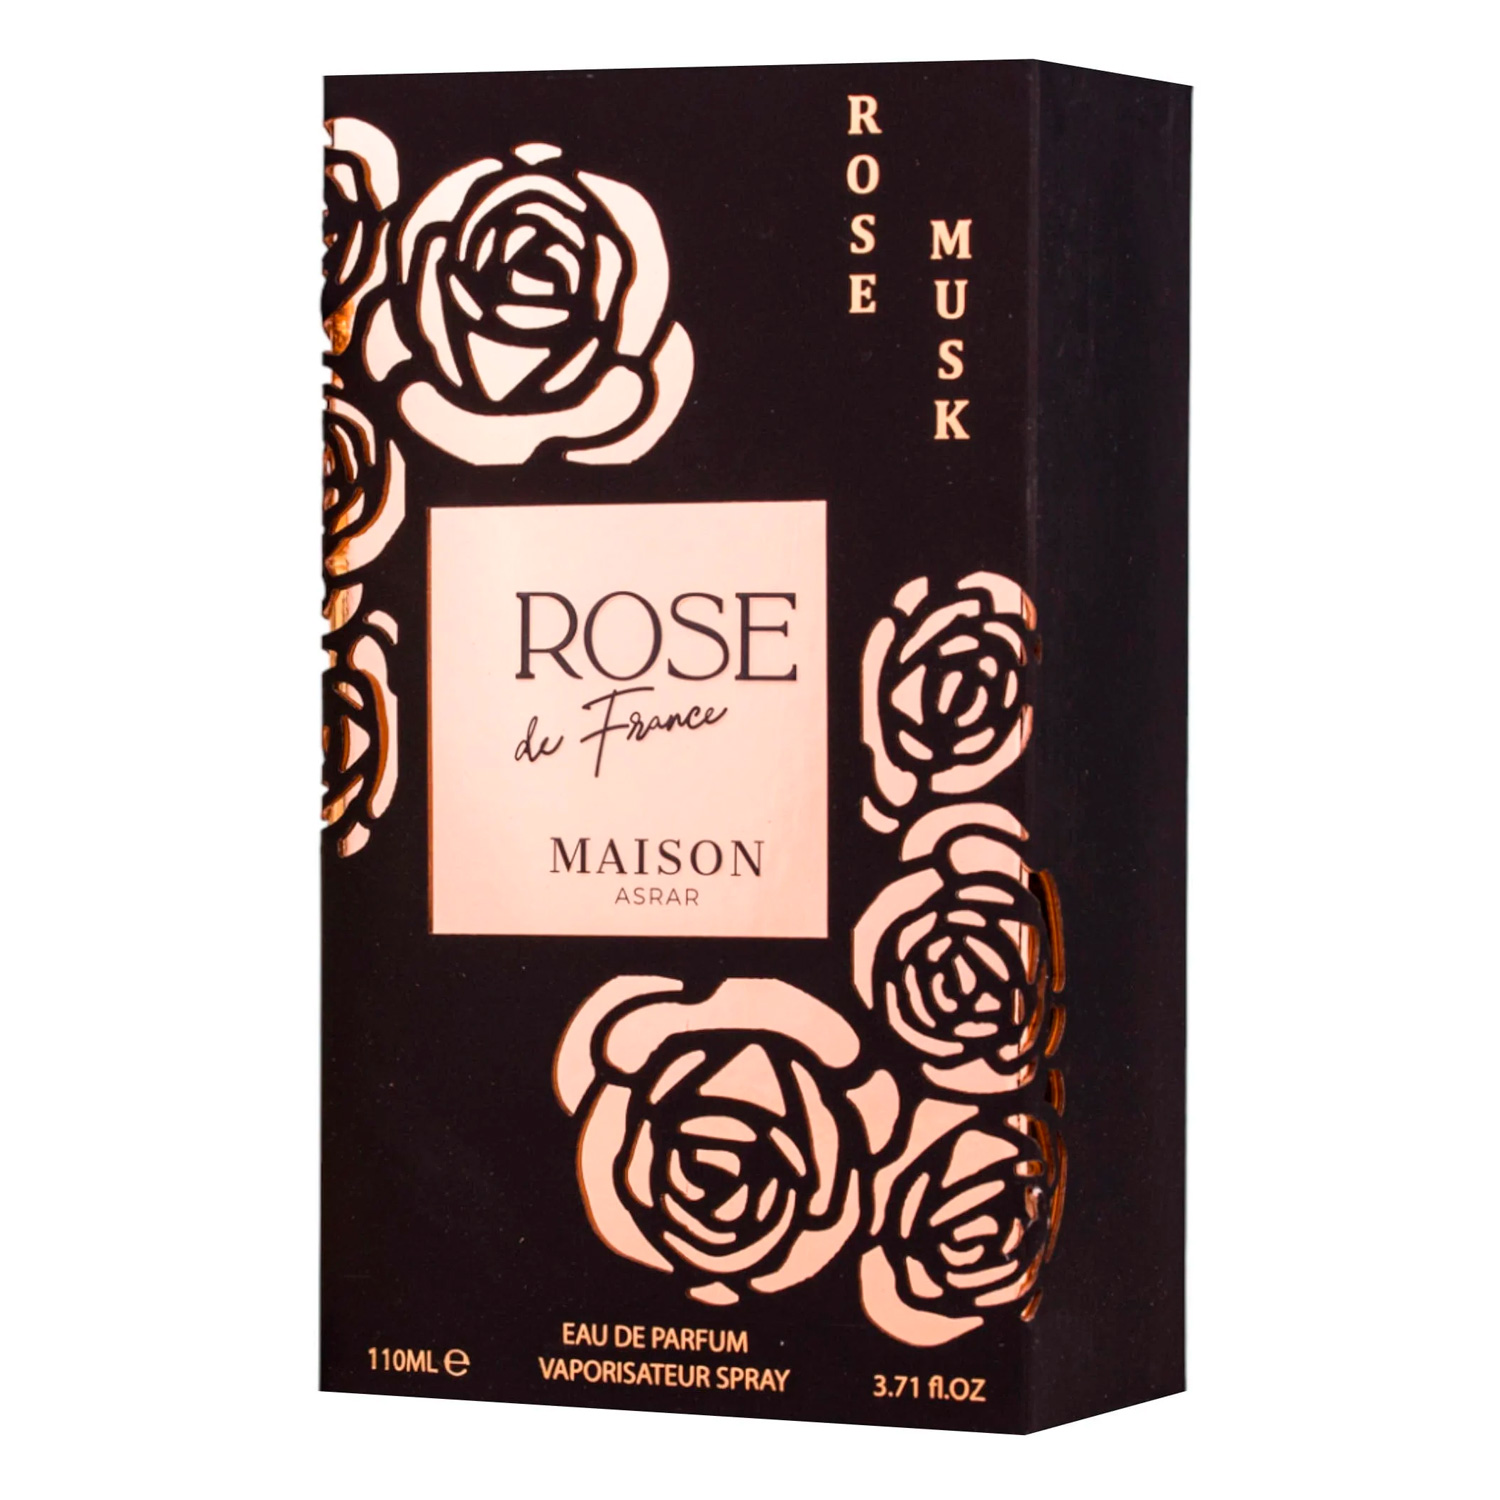 Perfume Maison Asrar Rose Musk Eau de Parfum Feminino 110ml